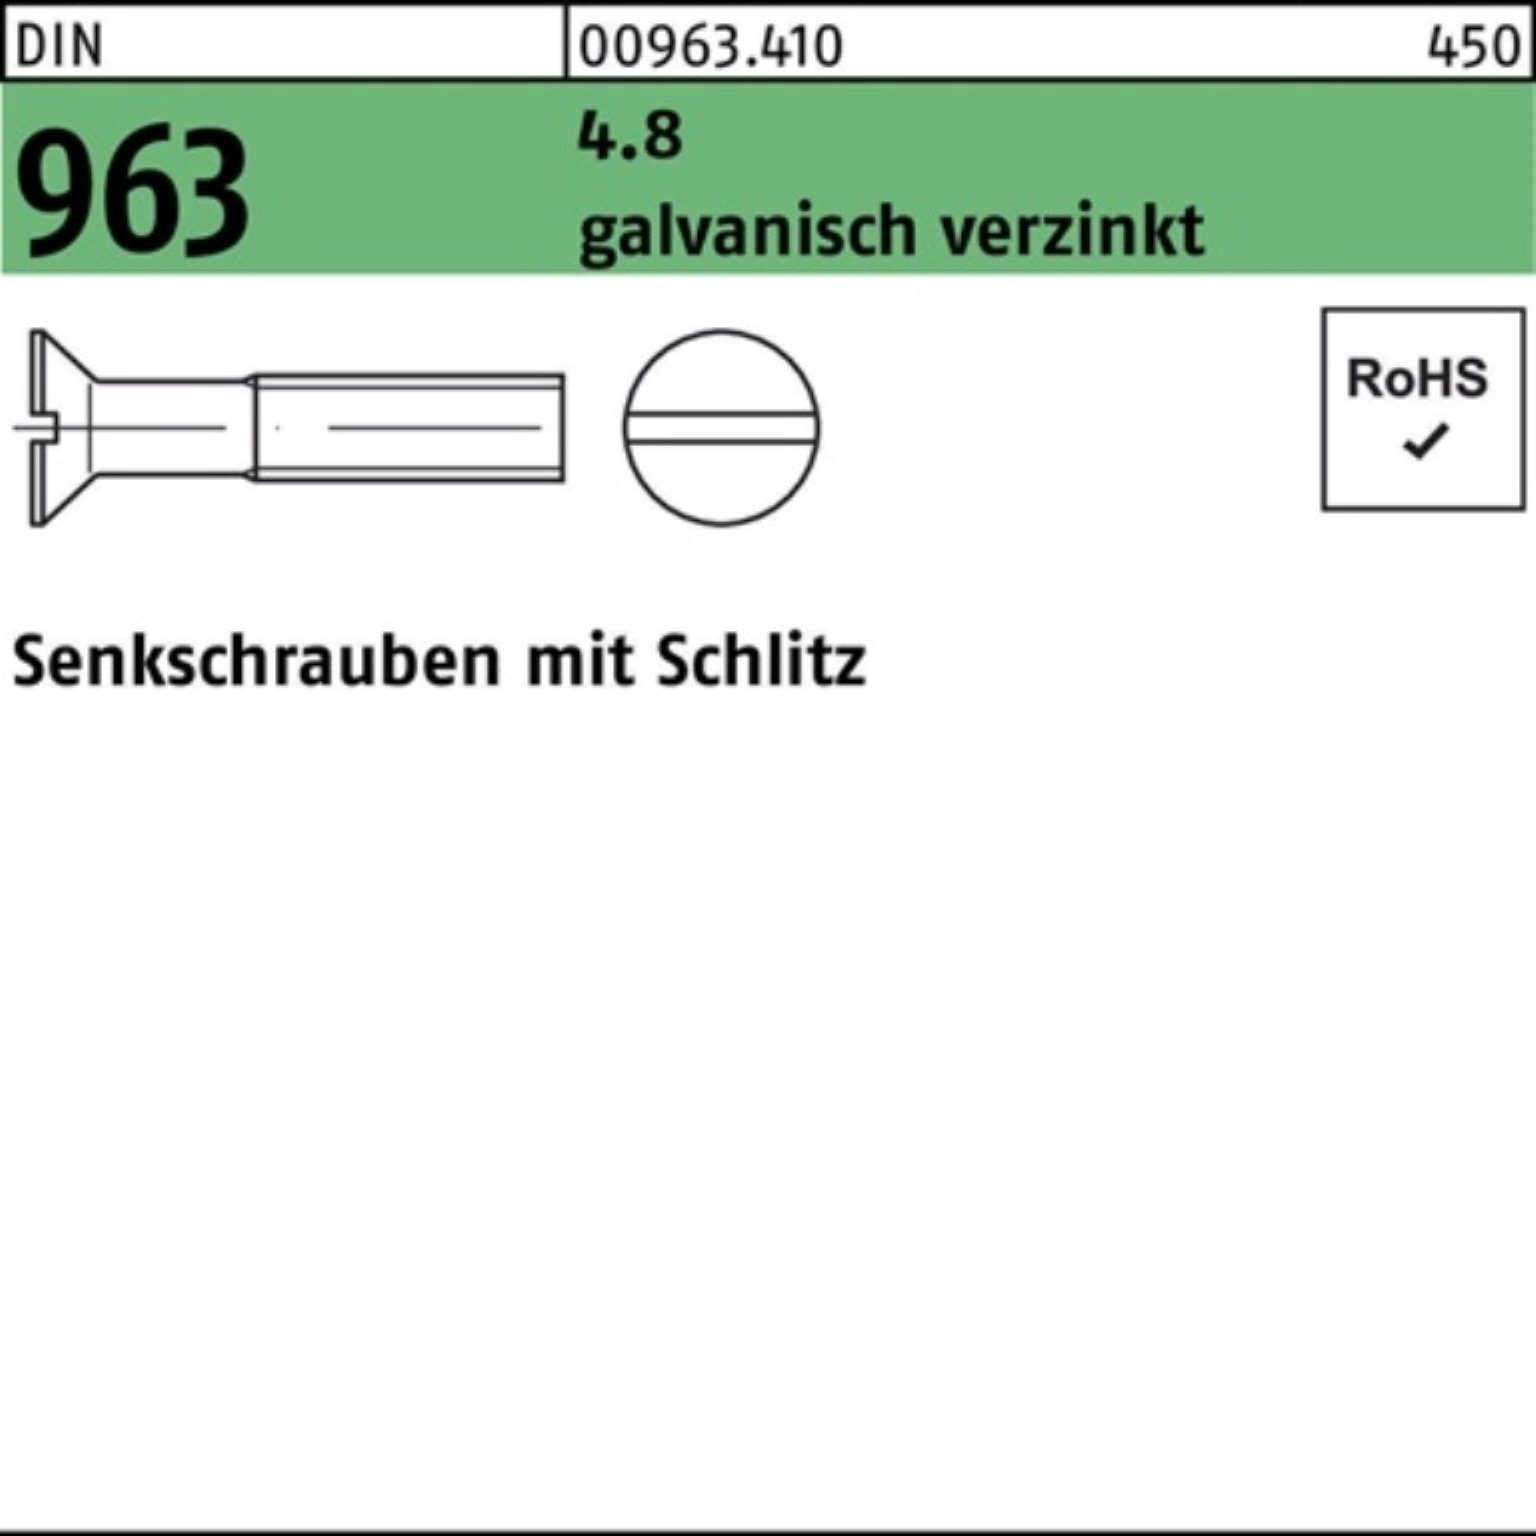 Stü 4.8 Senkschraube Schlitz galv.verz. DIN Pack 200er Reyher Senkschraube 963 M4x 50 200